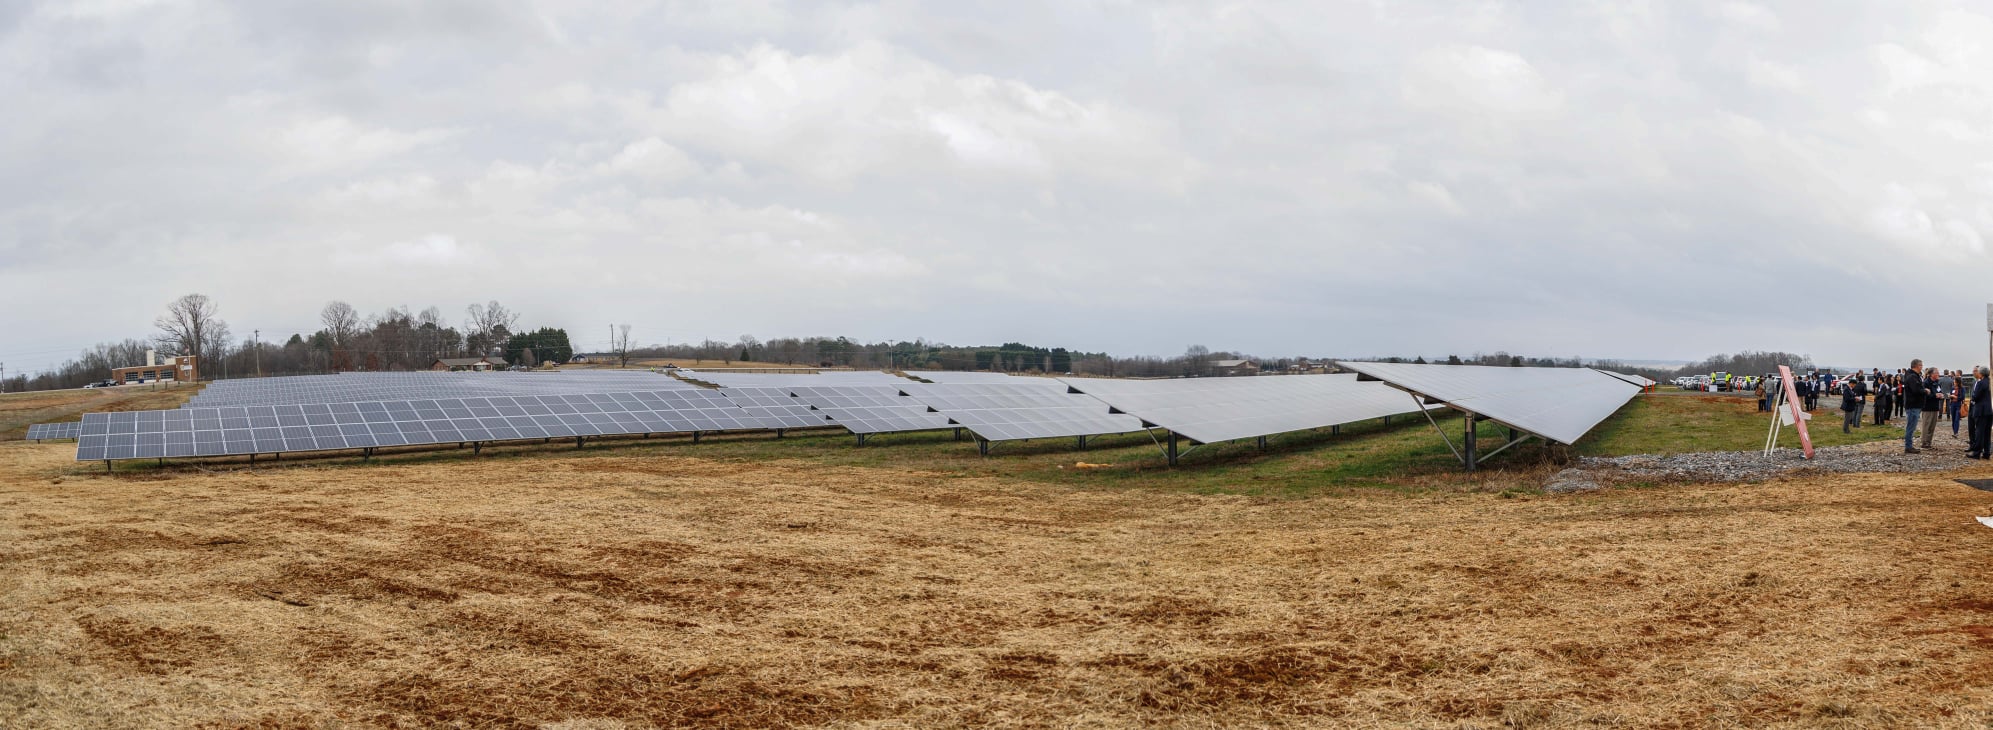 Caldwell County Economic Development Commission solar